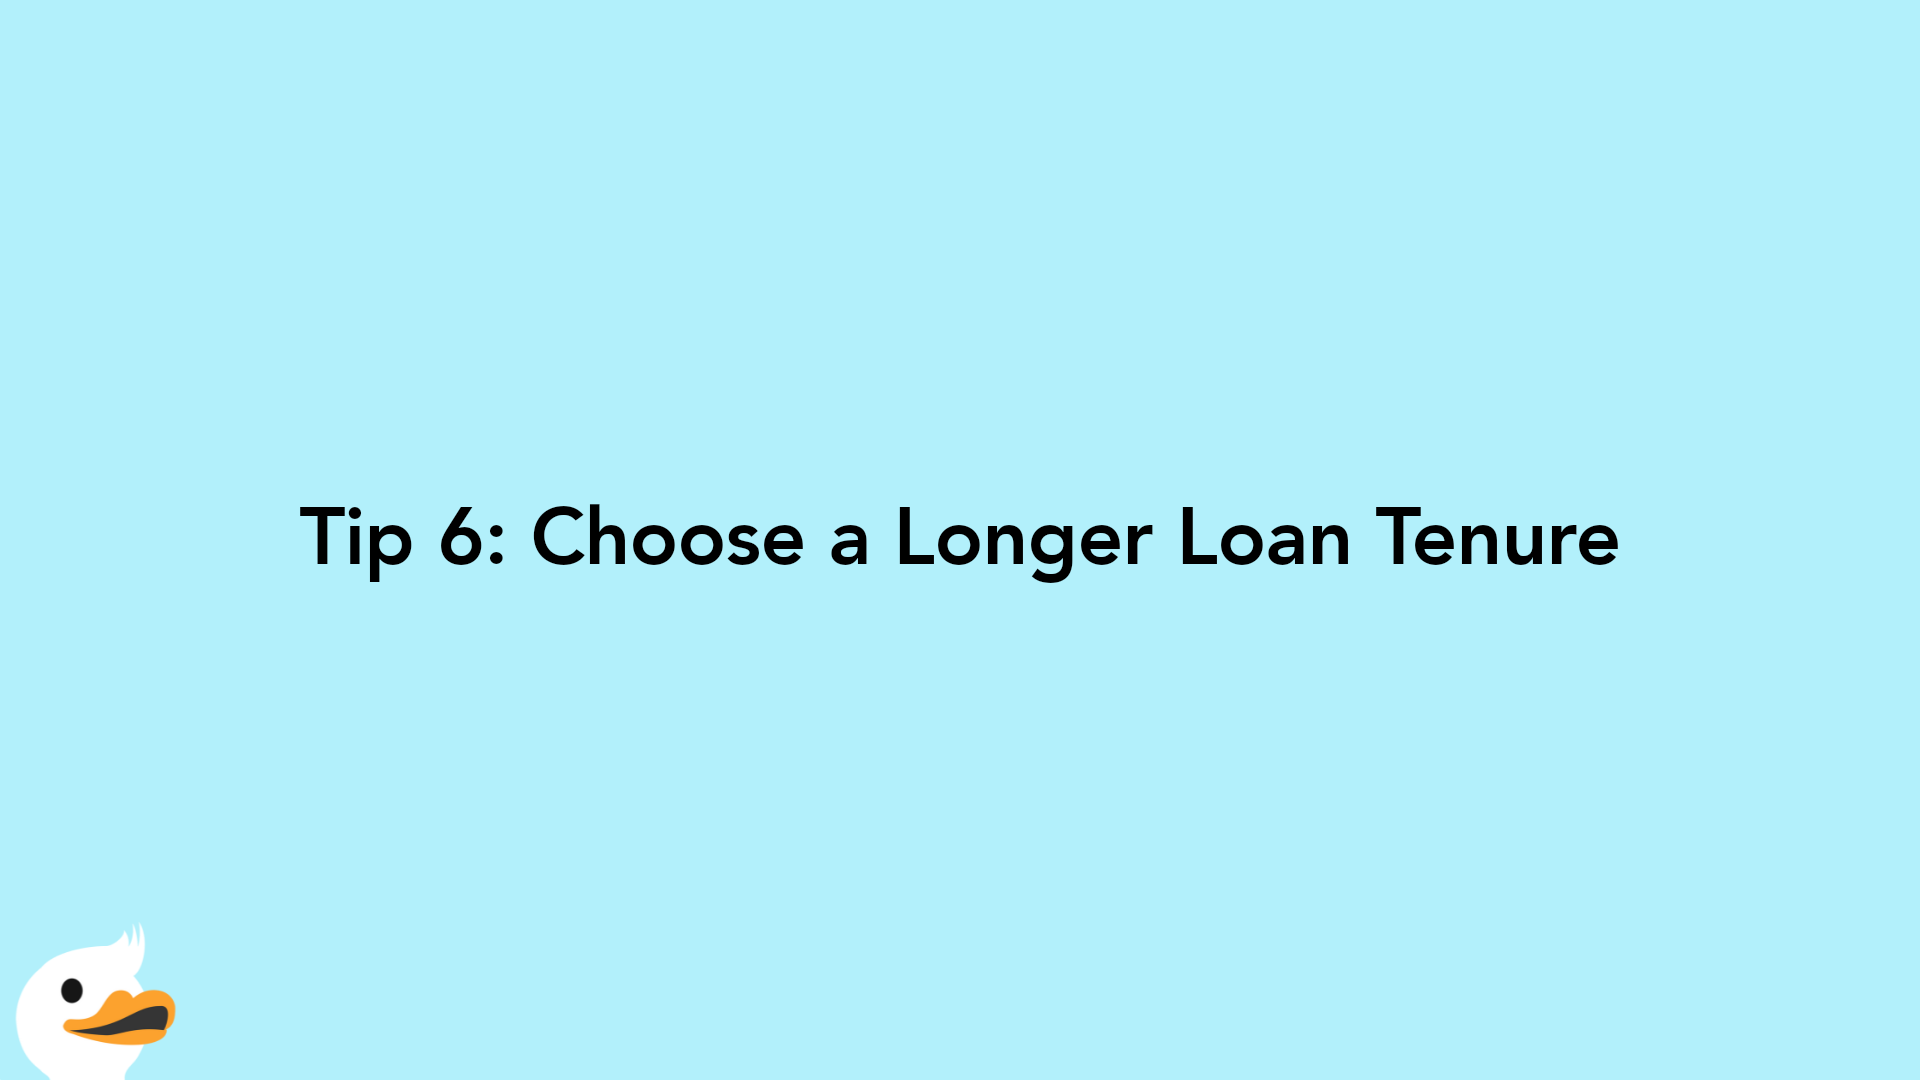 Tip 6: Choose a Longer Loan Tenure